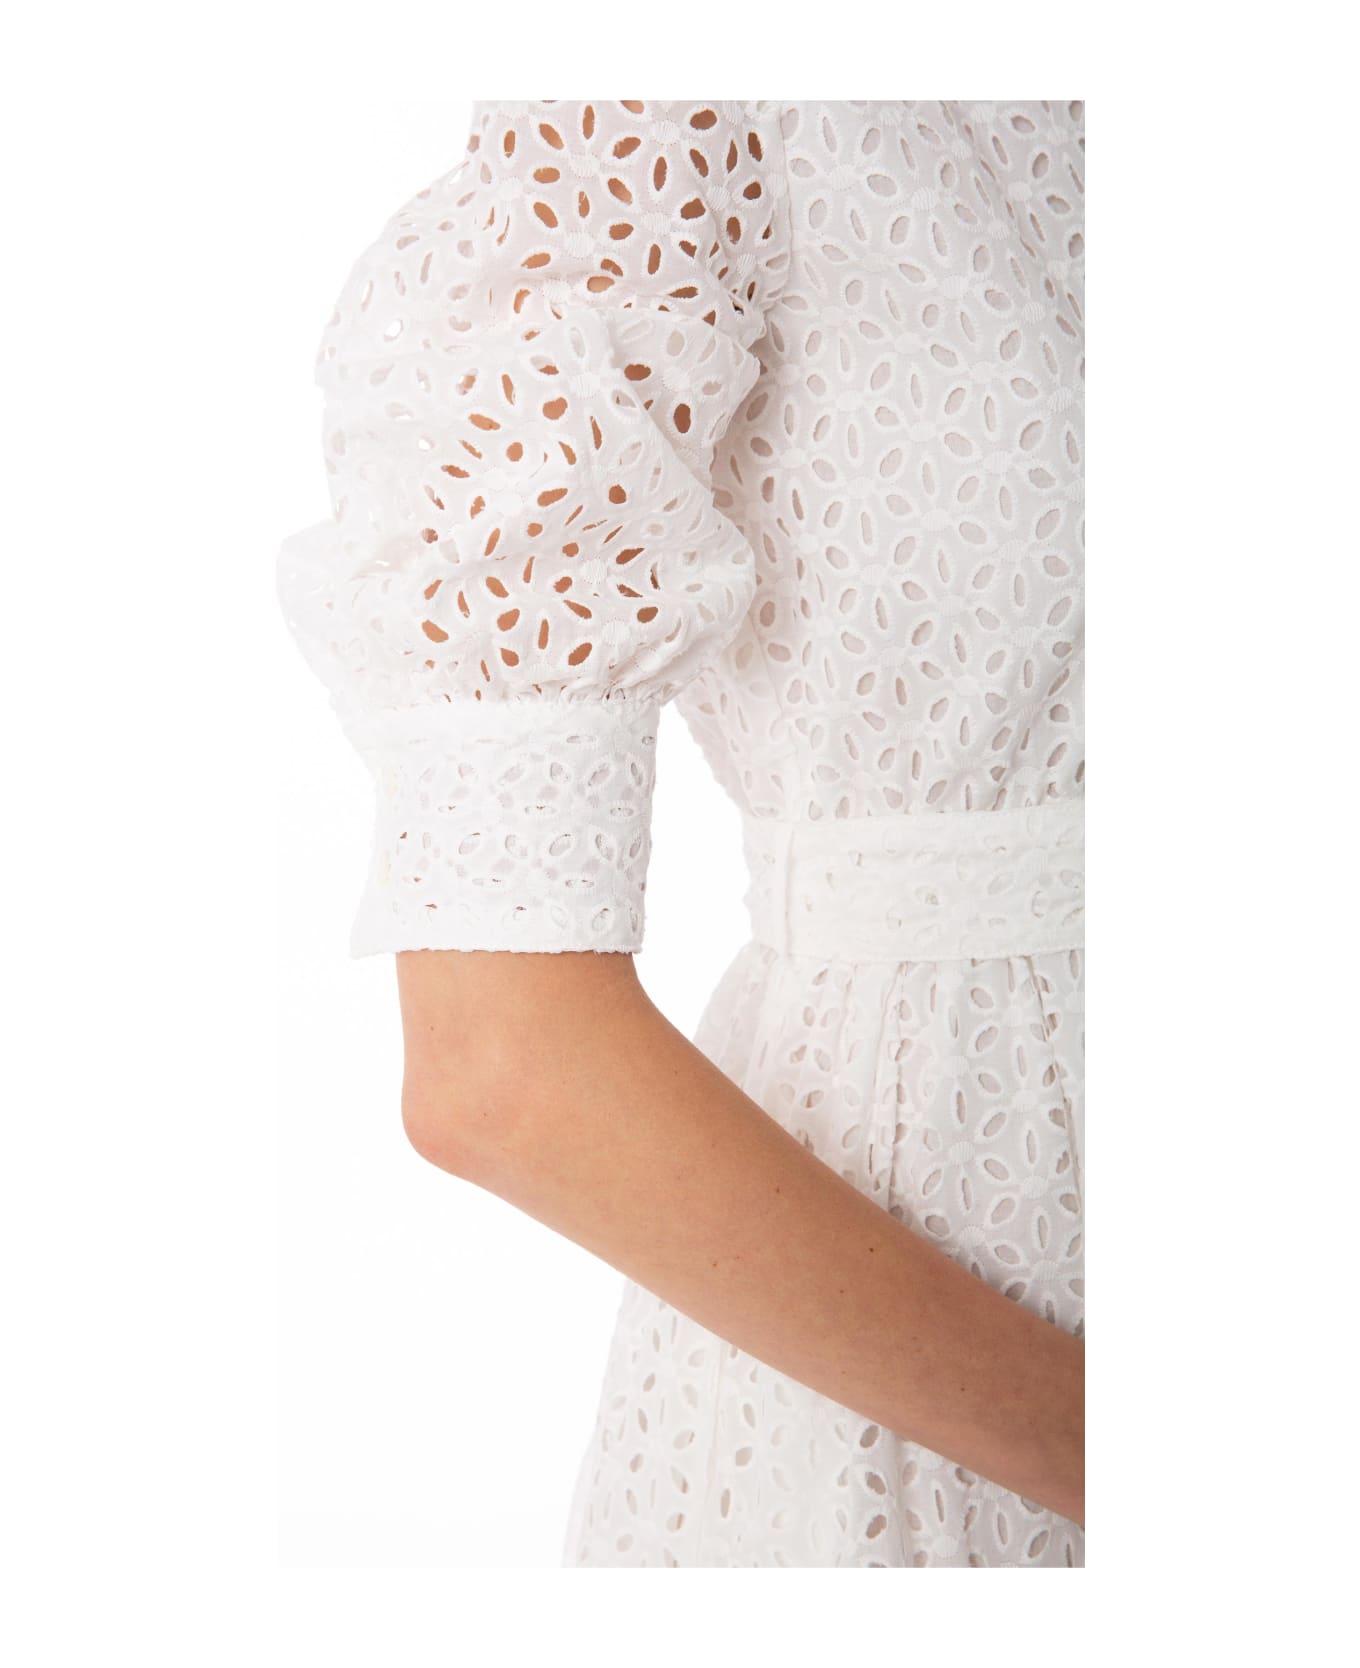 MC2 Saint Barth White Cotton Short Dress Daisy With Embroideries - WHITE